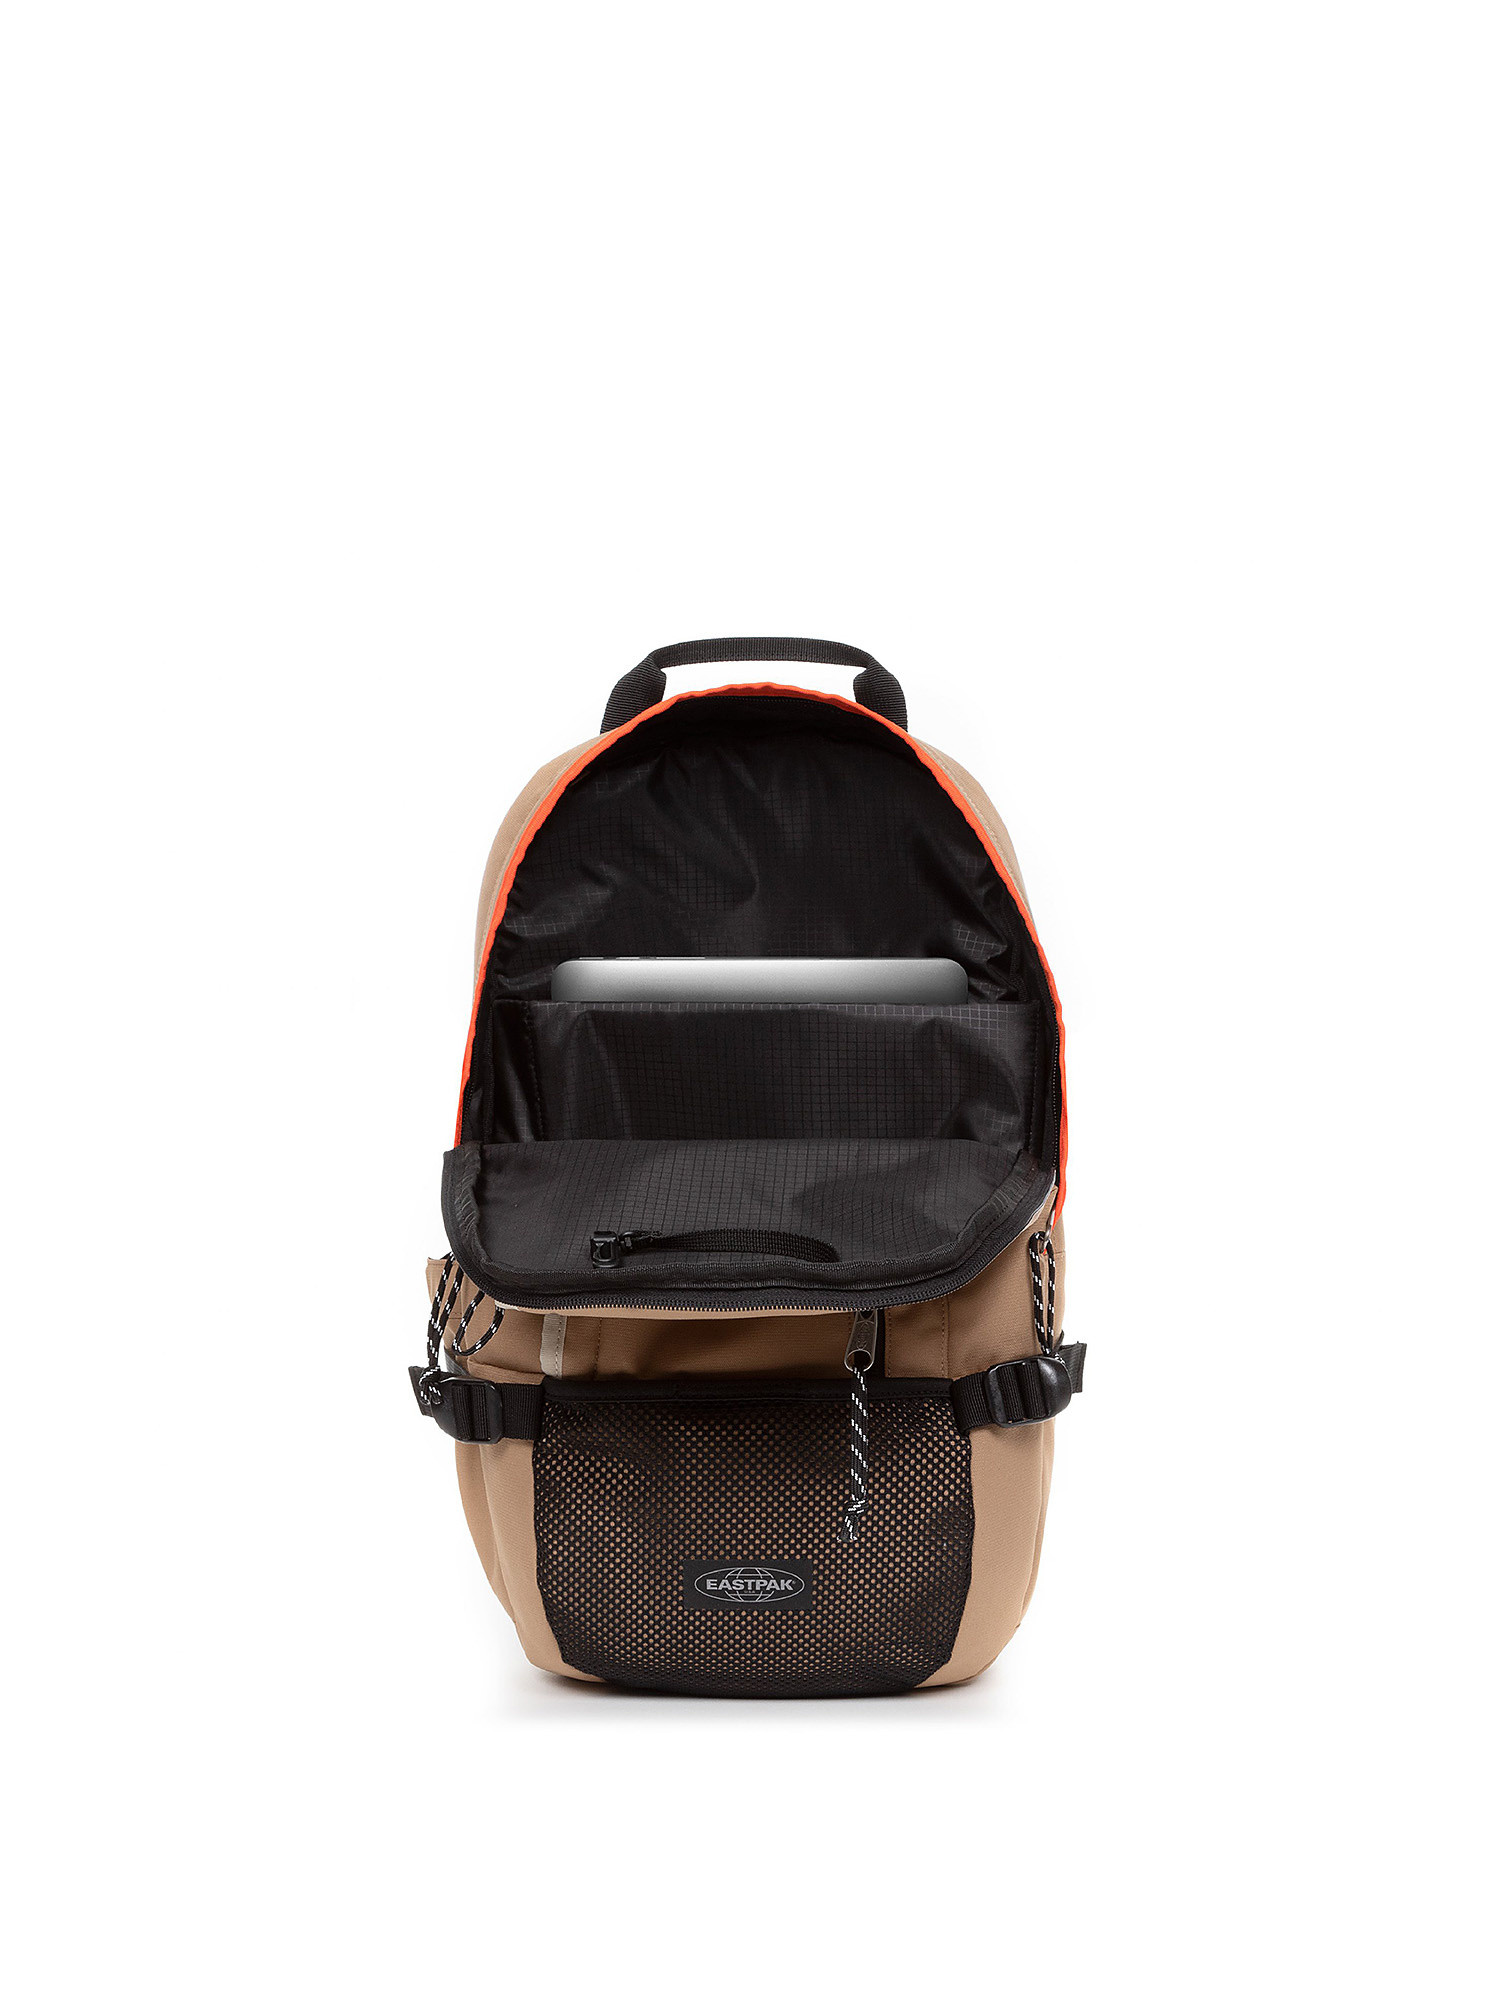 Eastpak - Floid Cs Explore brown backpack, Brown, large image number 1